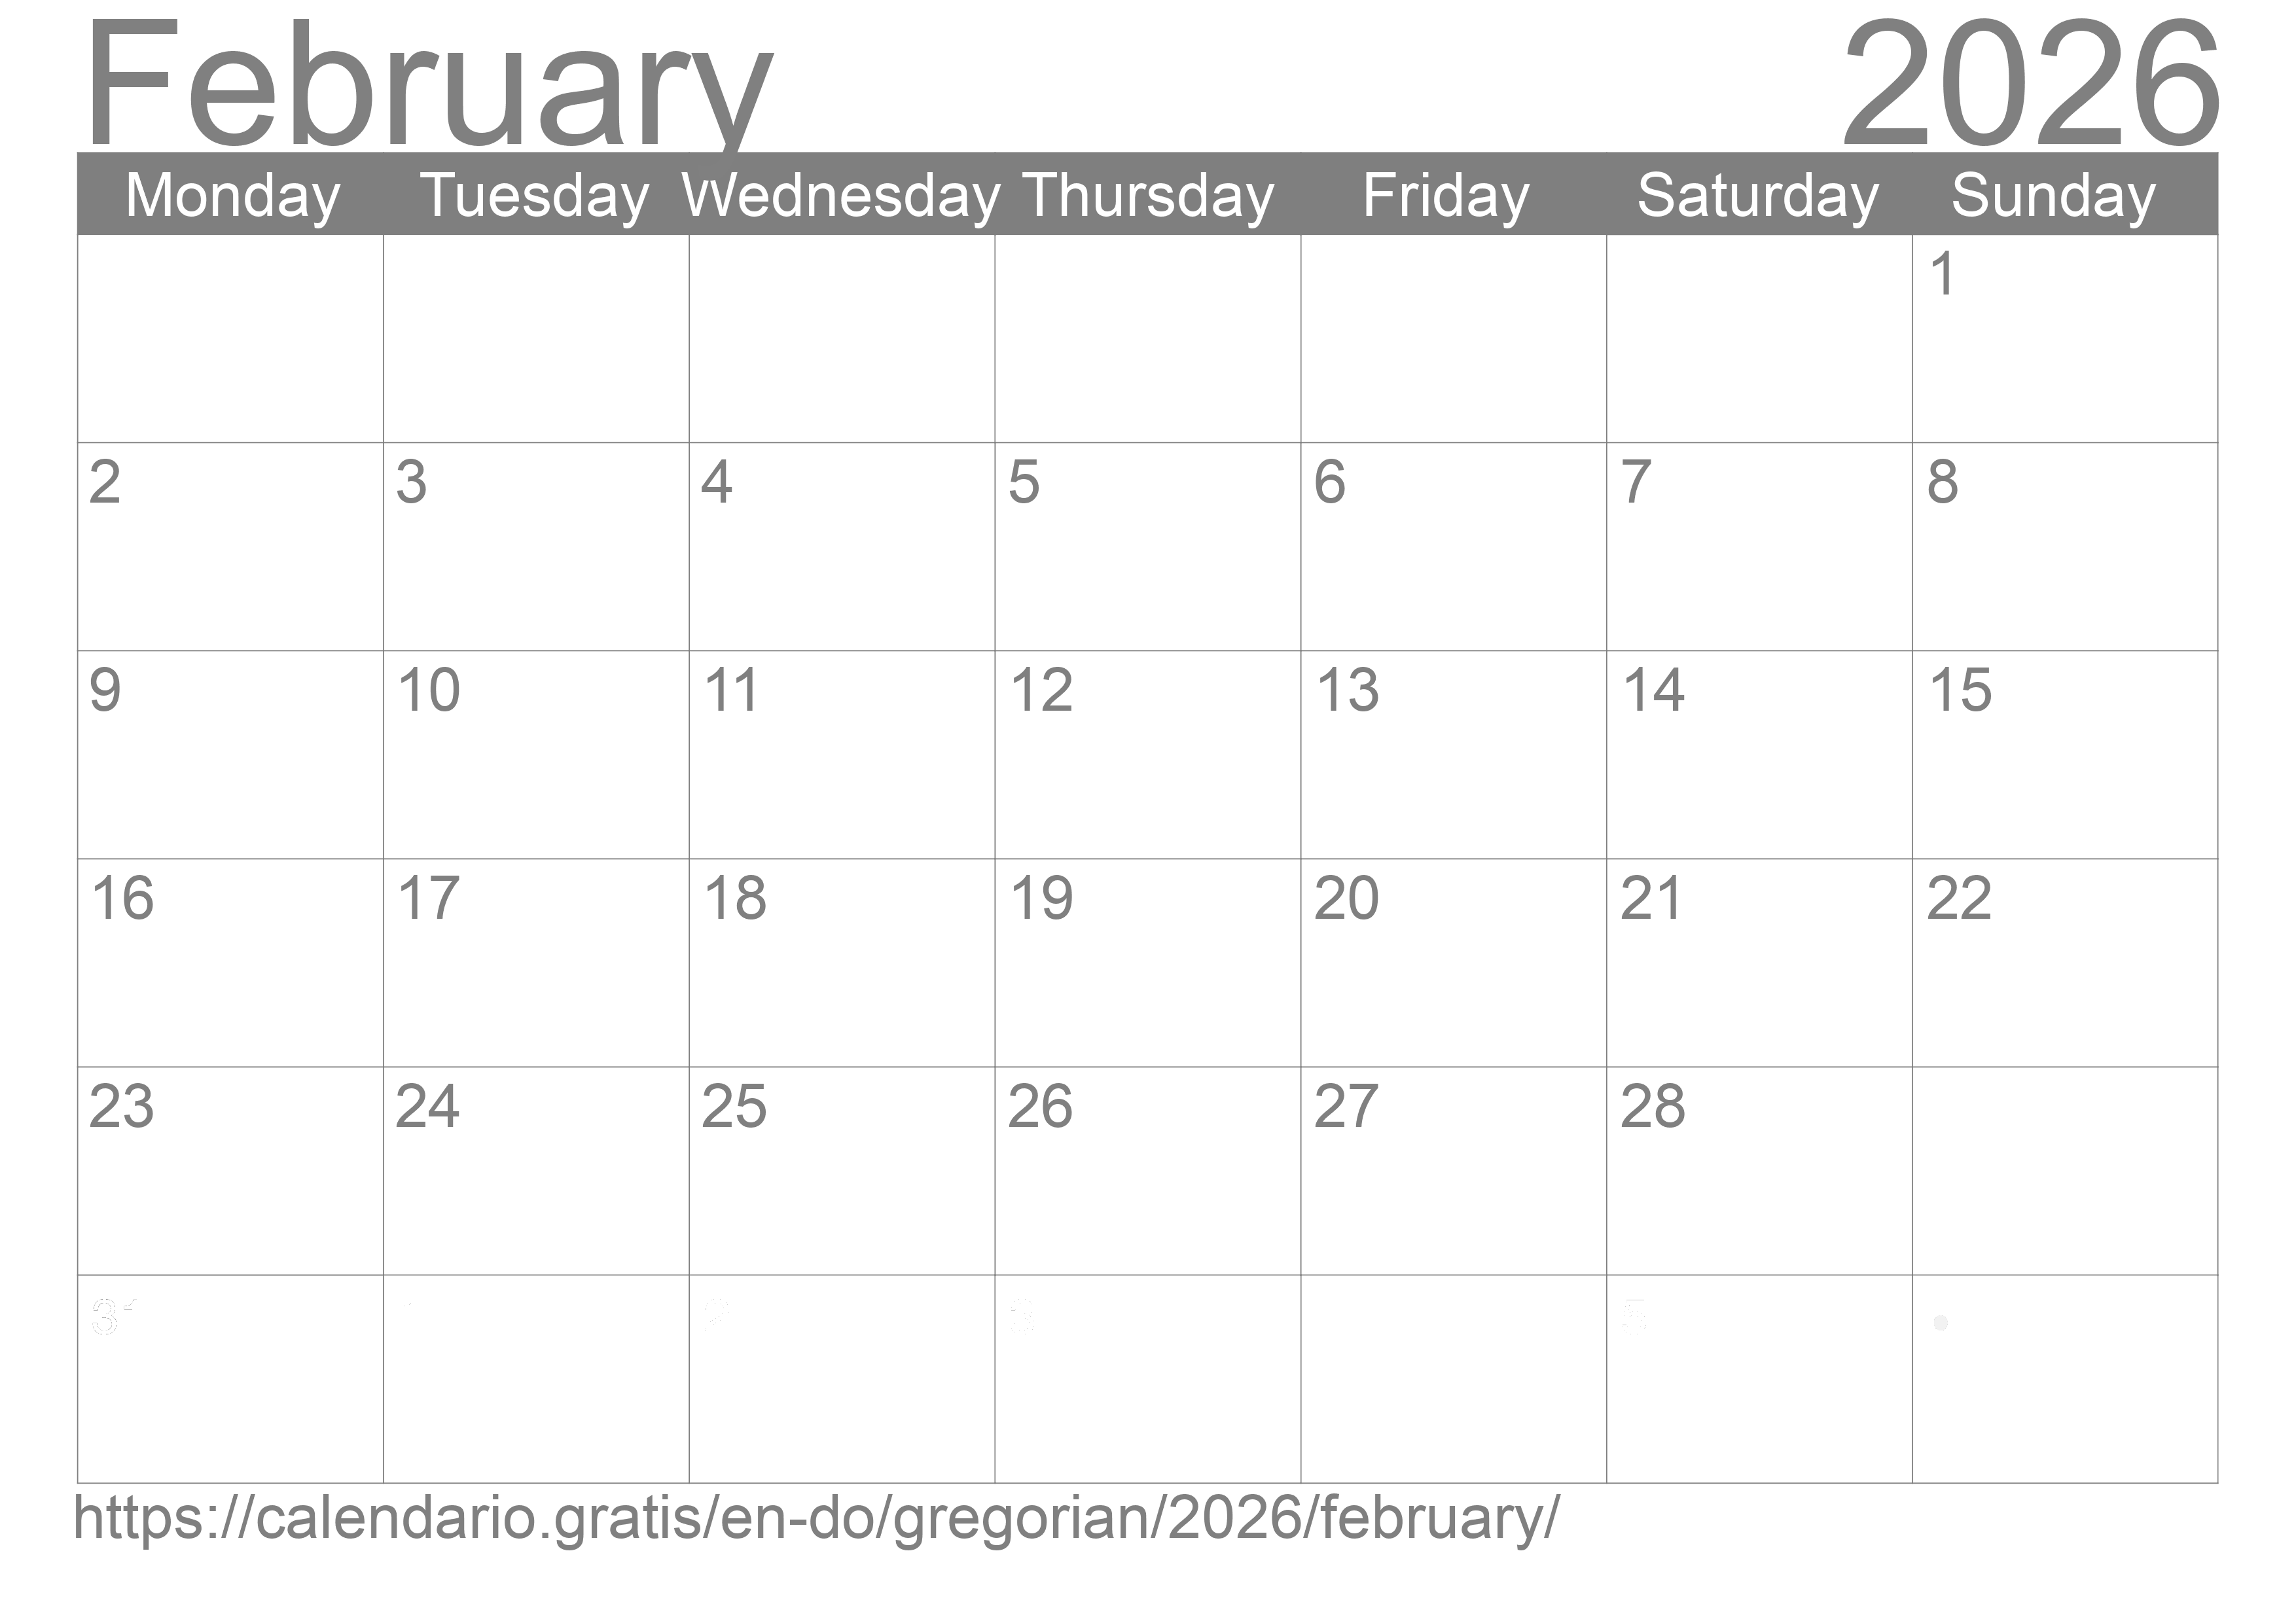 Calendar February 2026 to print